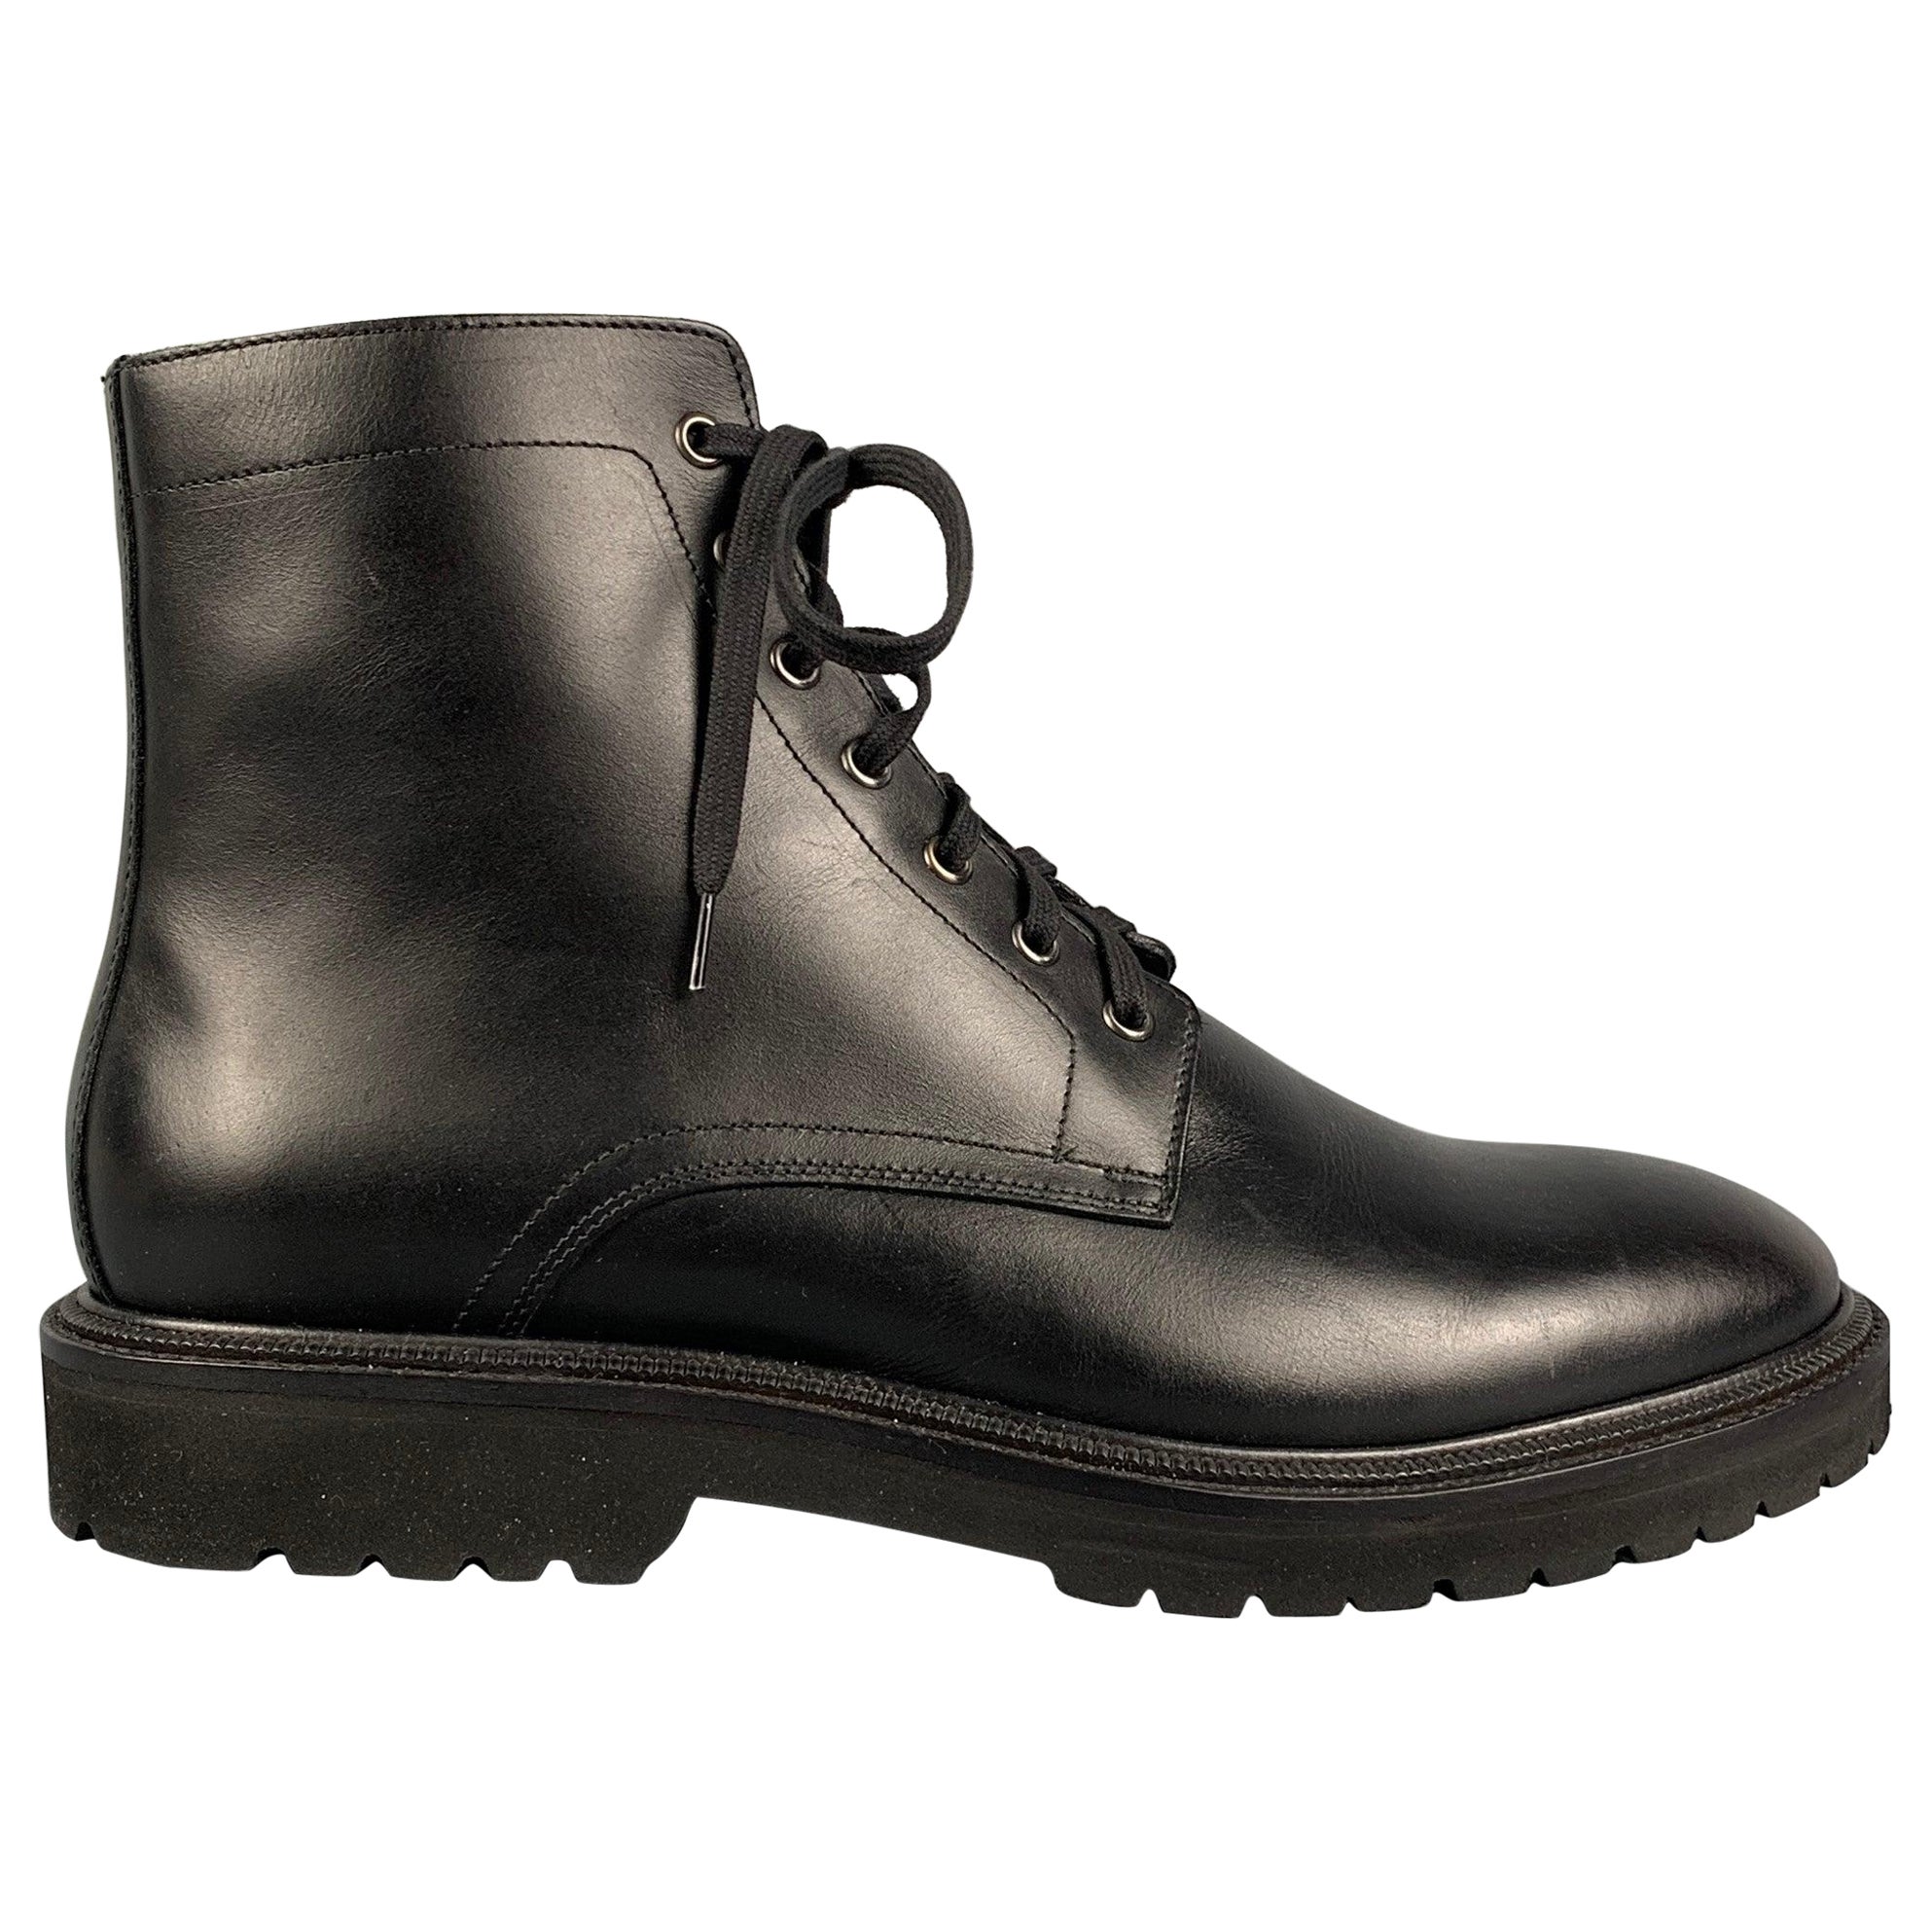 AQUATALIA Size 11 Black Leather Lace Up Boots For Sale